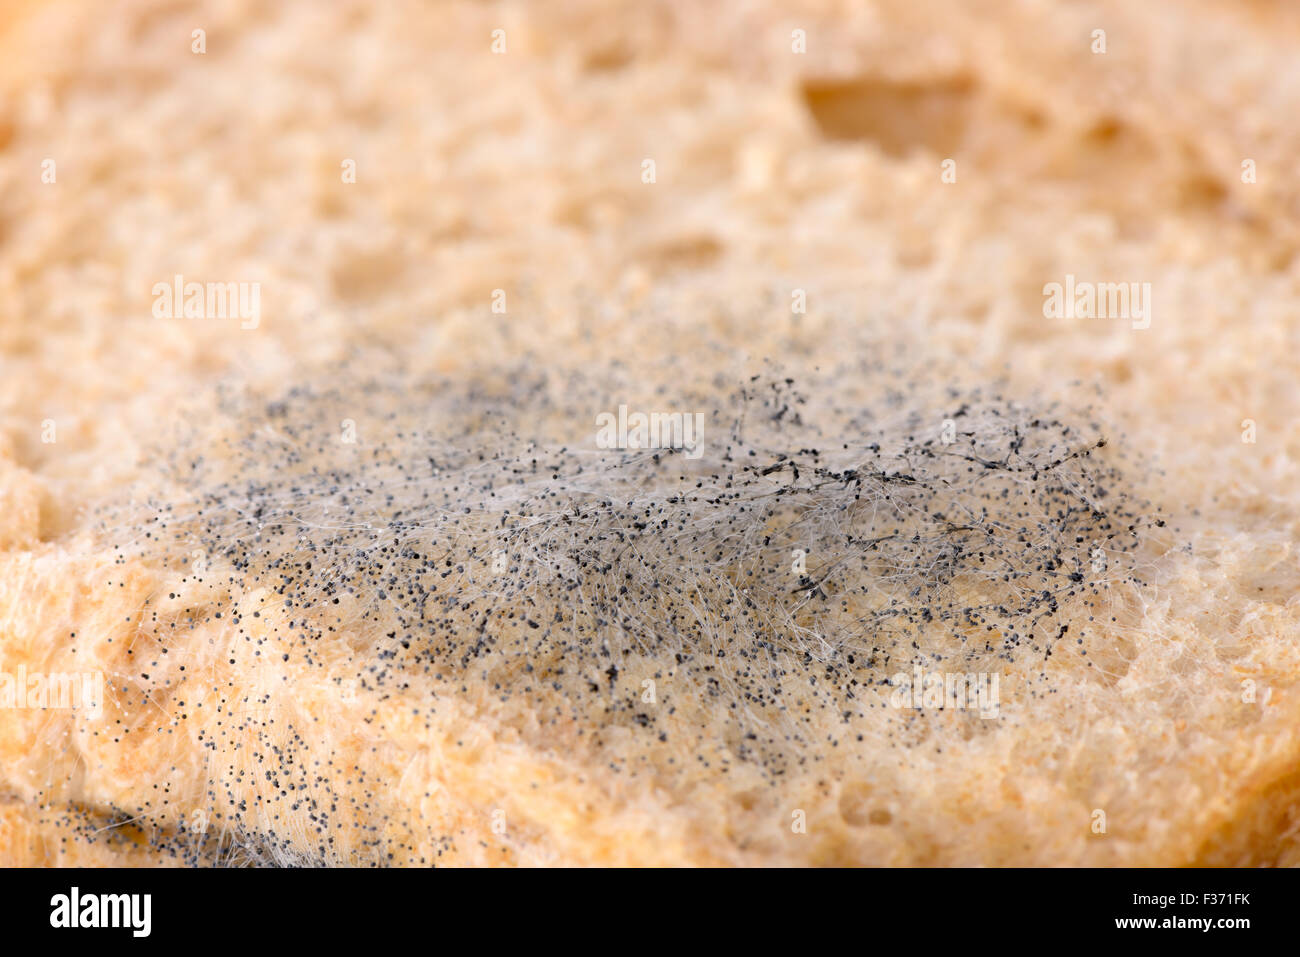 macro image of black mold on a sliced bread Stock Photo